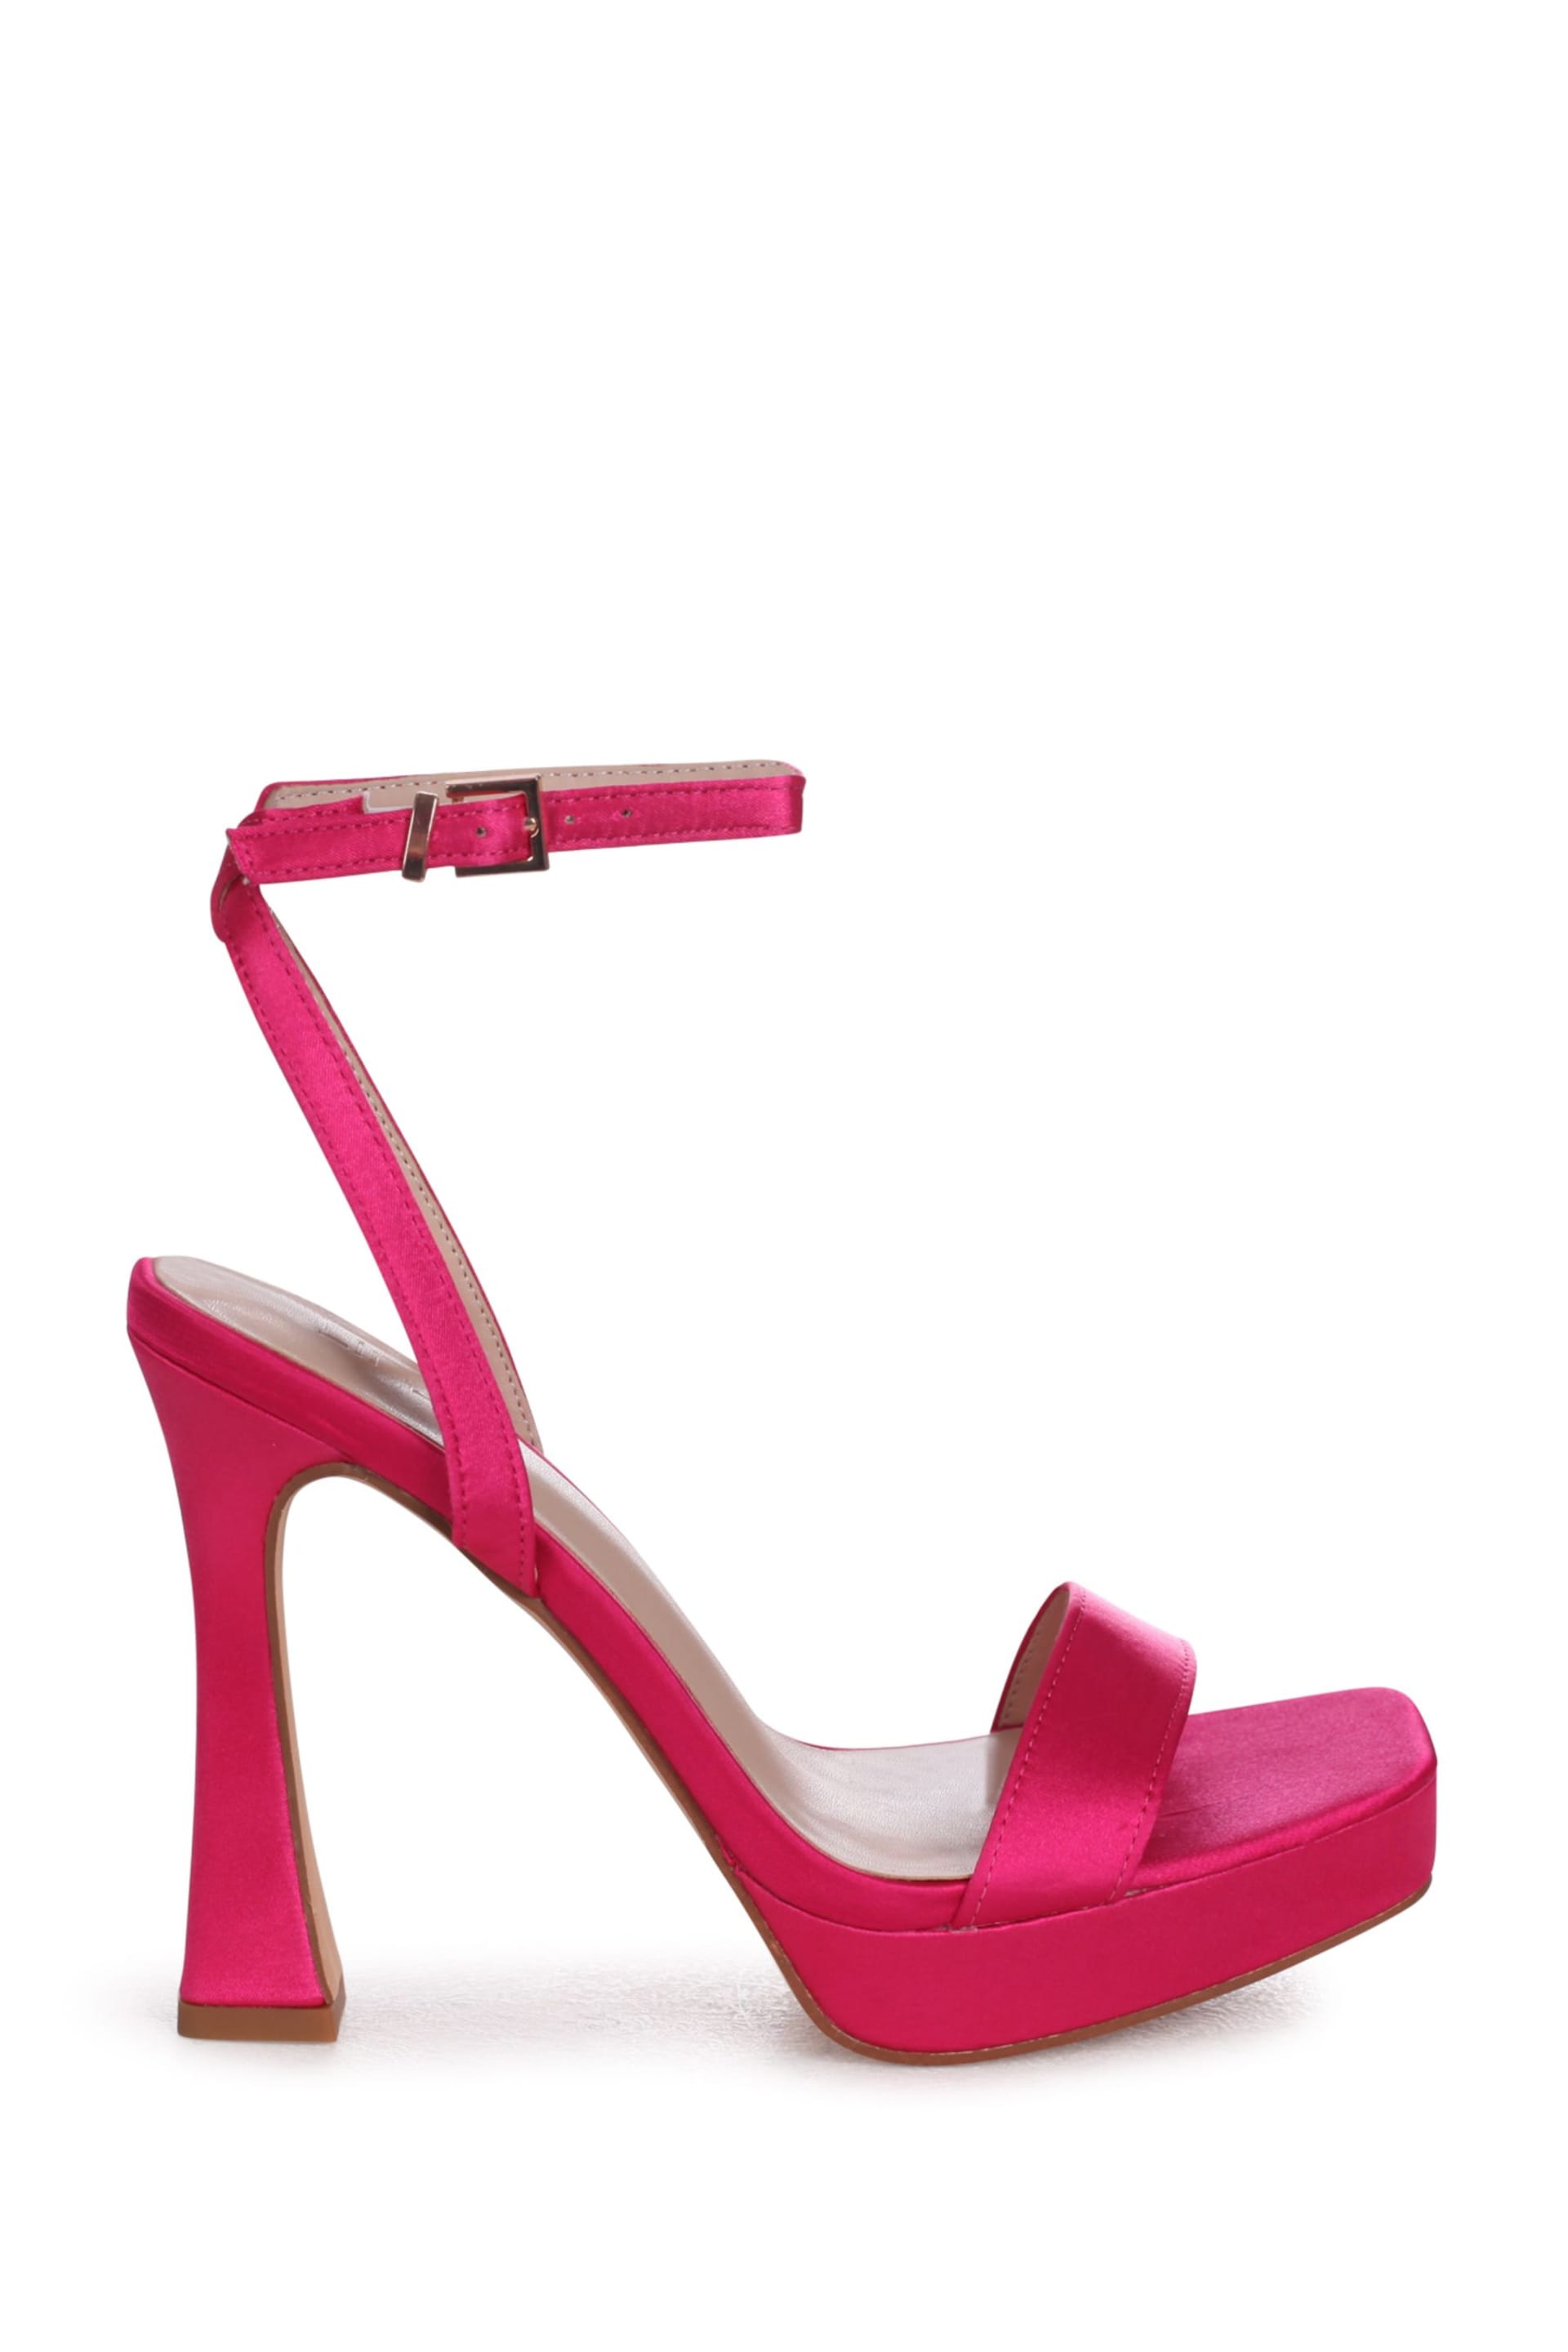 Linzi Pink Haisley Platform Heeled Sandals With Square Toe - Image 1 of 1